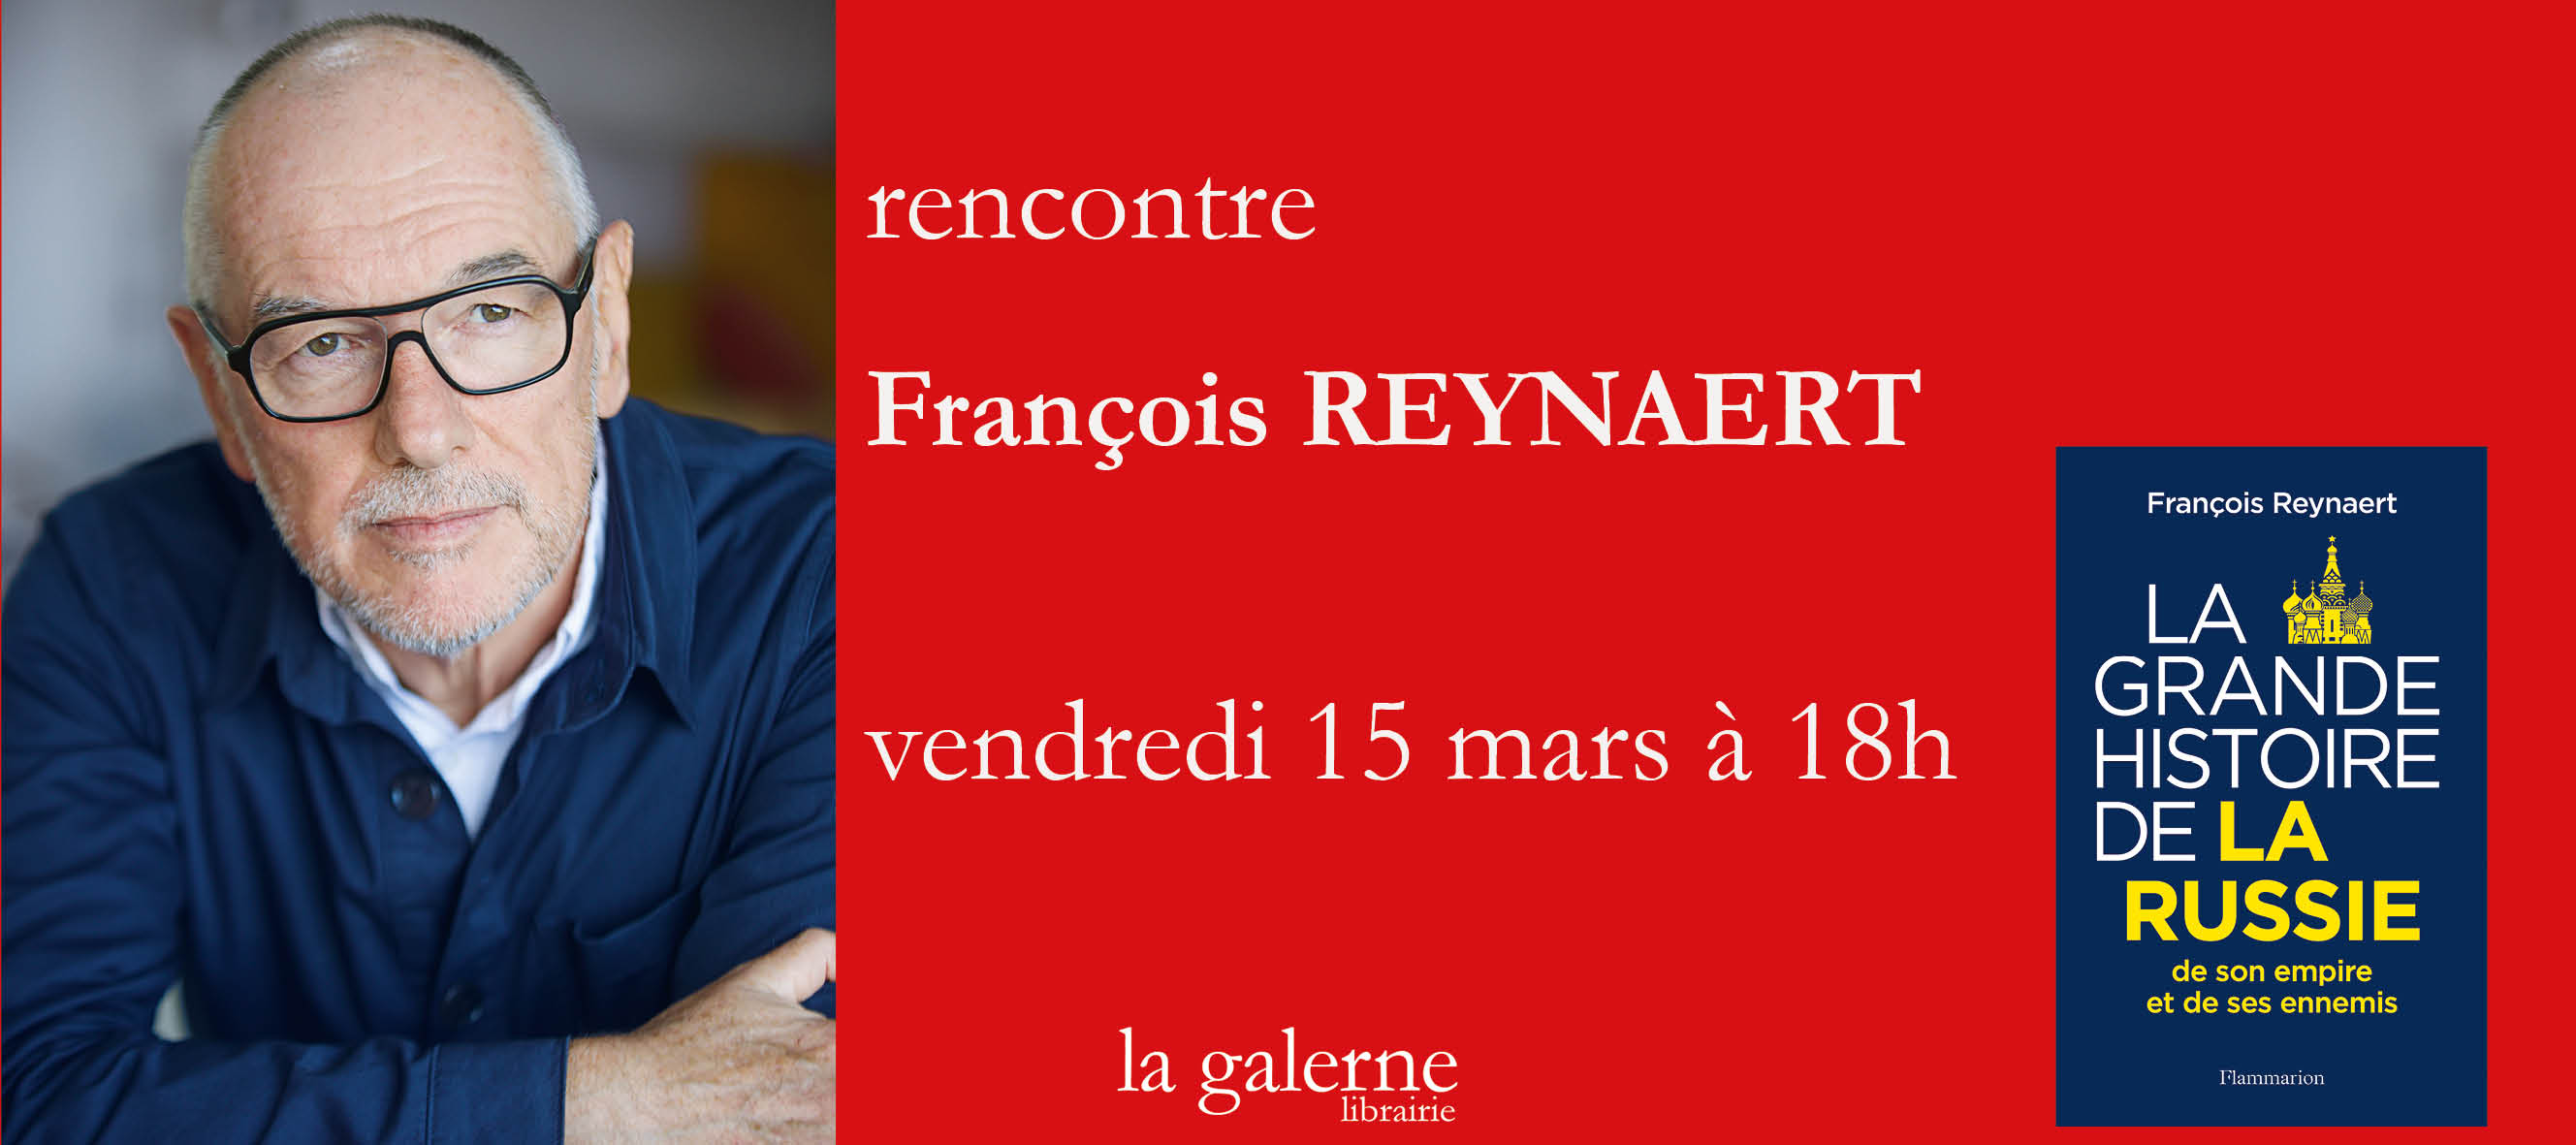 rencontre François Reynaert